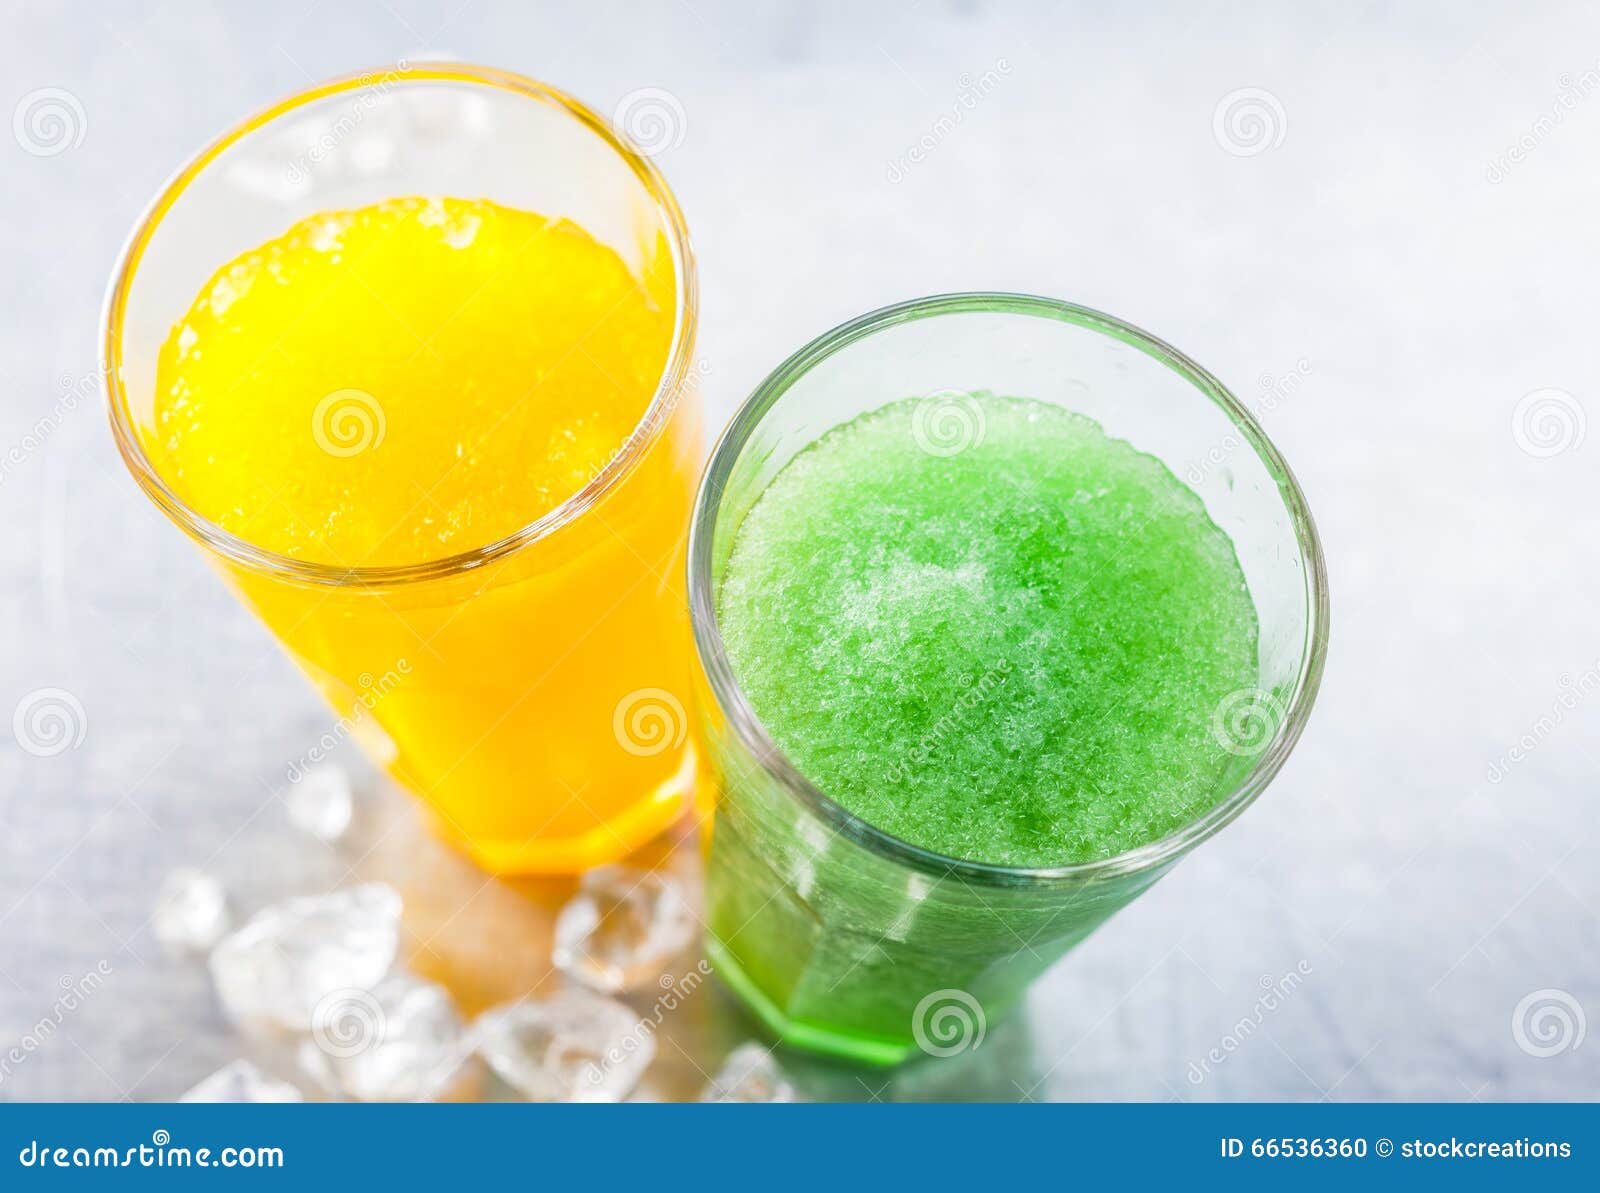 https://thumbs.dreamstime.com/z/frozen-fruit-slush-granitas-glass-cups-high-angle-still-life-view-refreshing-colorful-granita-drinks-yellow-green-66536360.jpg